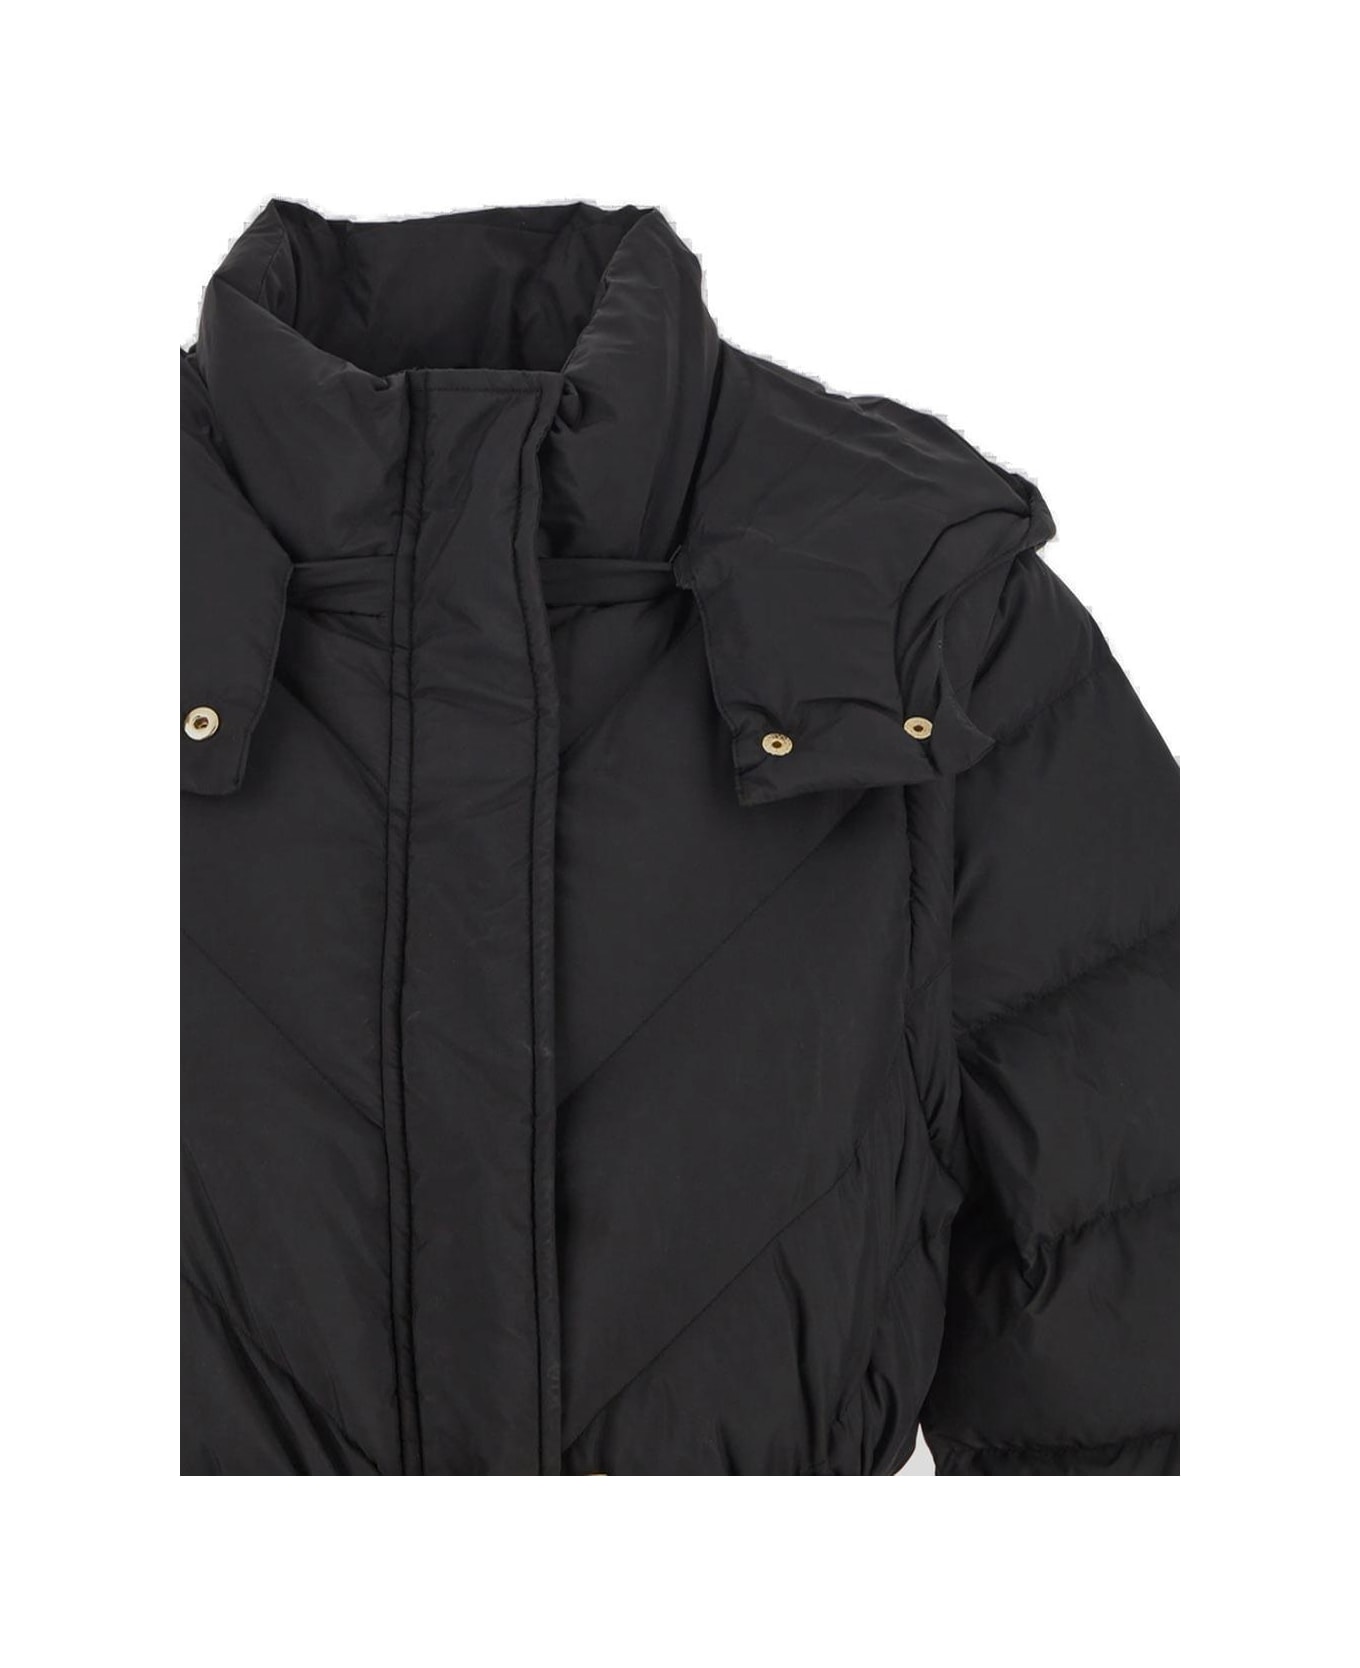 Pinko Belted High Neck Hooded Coat - Black コート